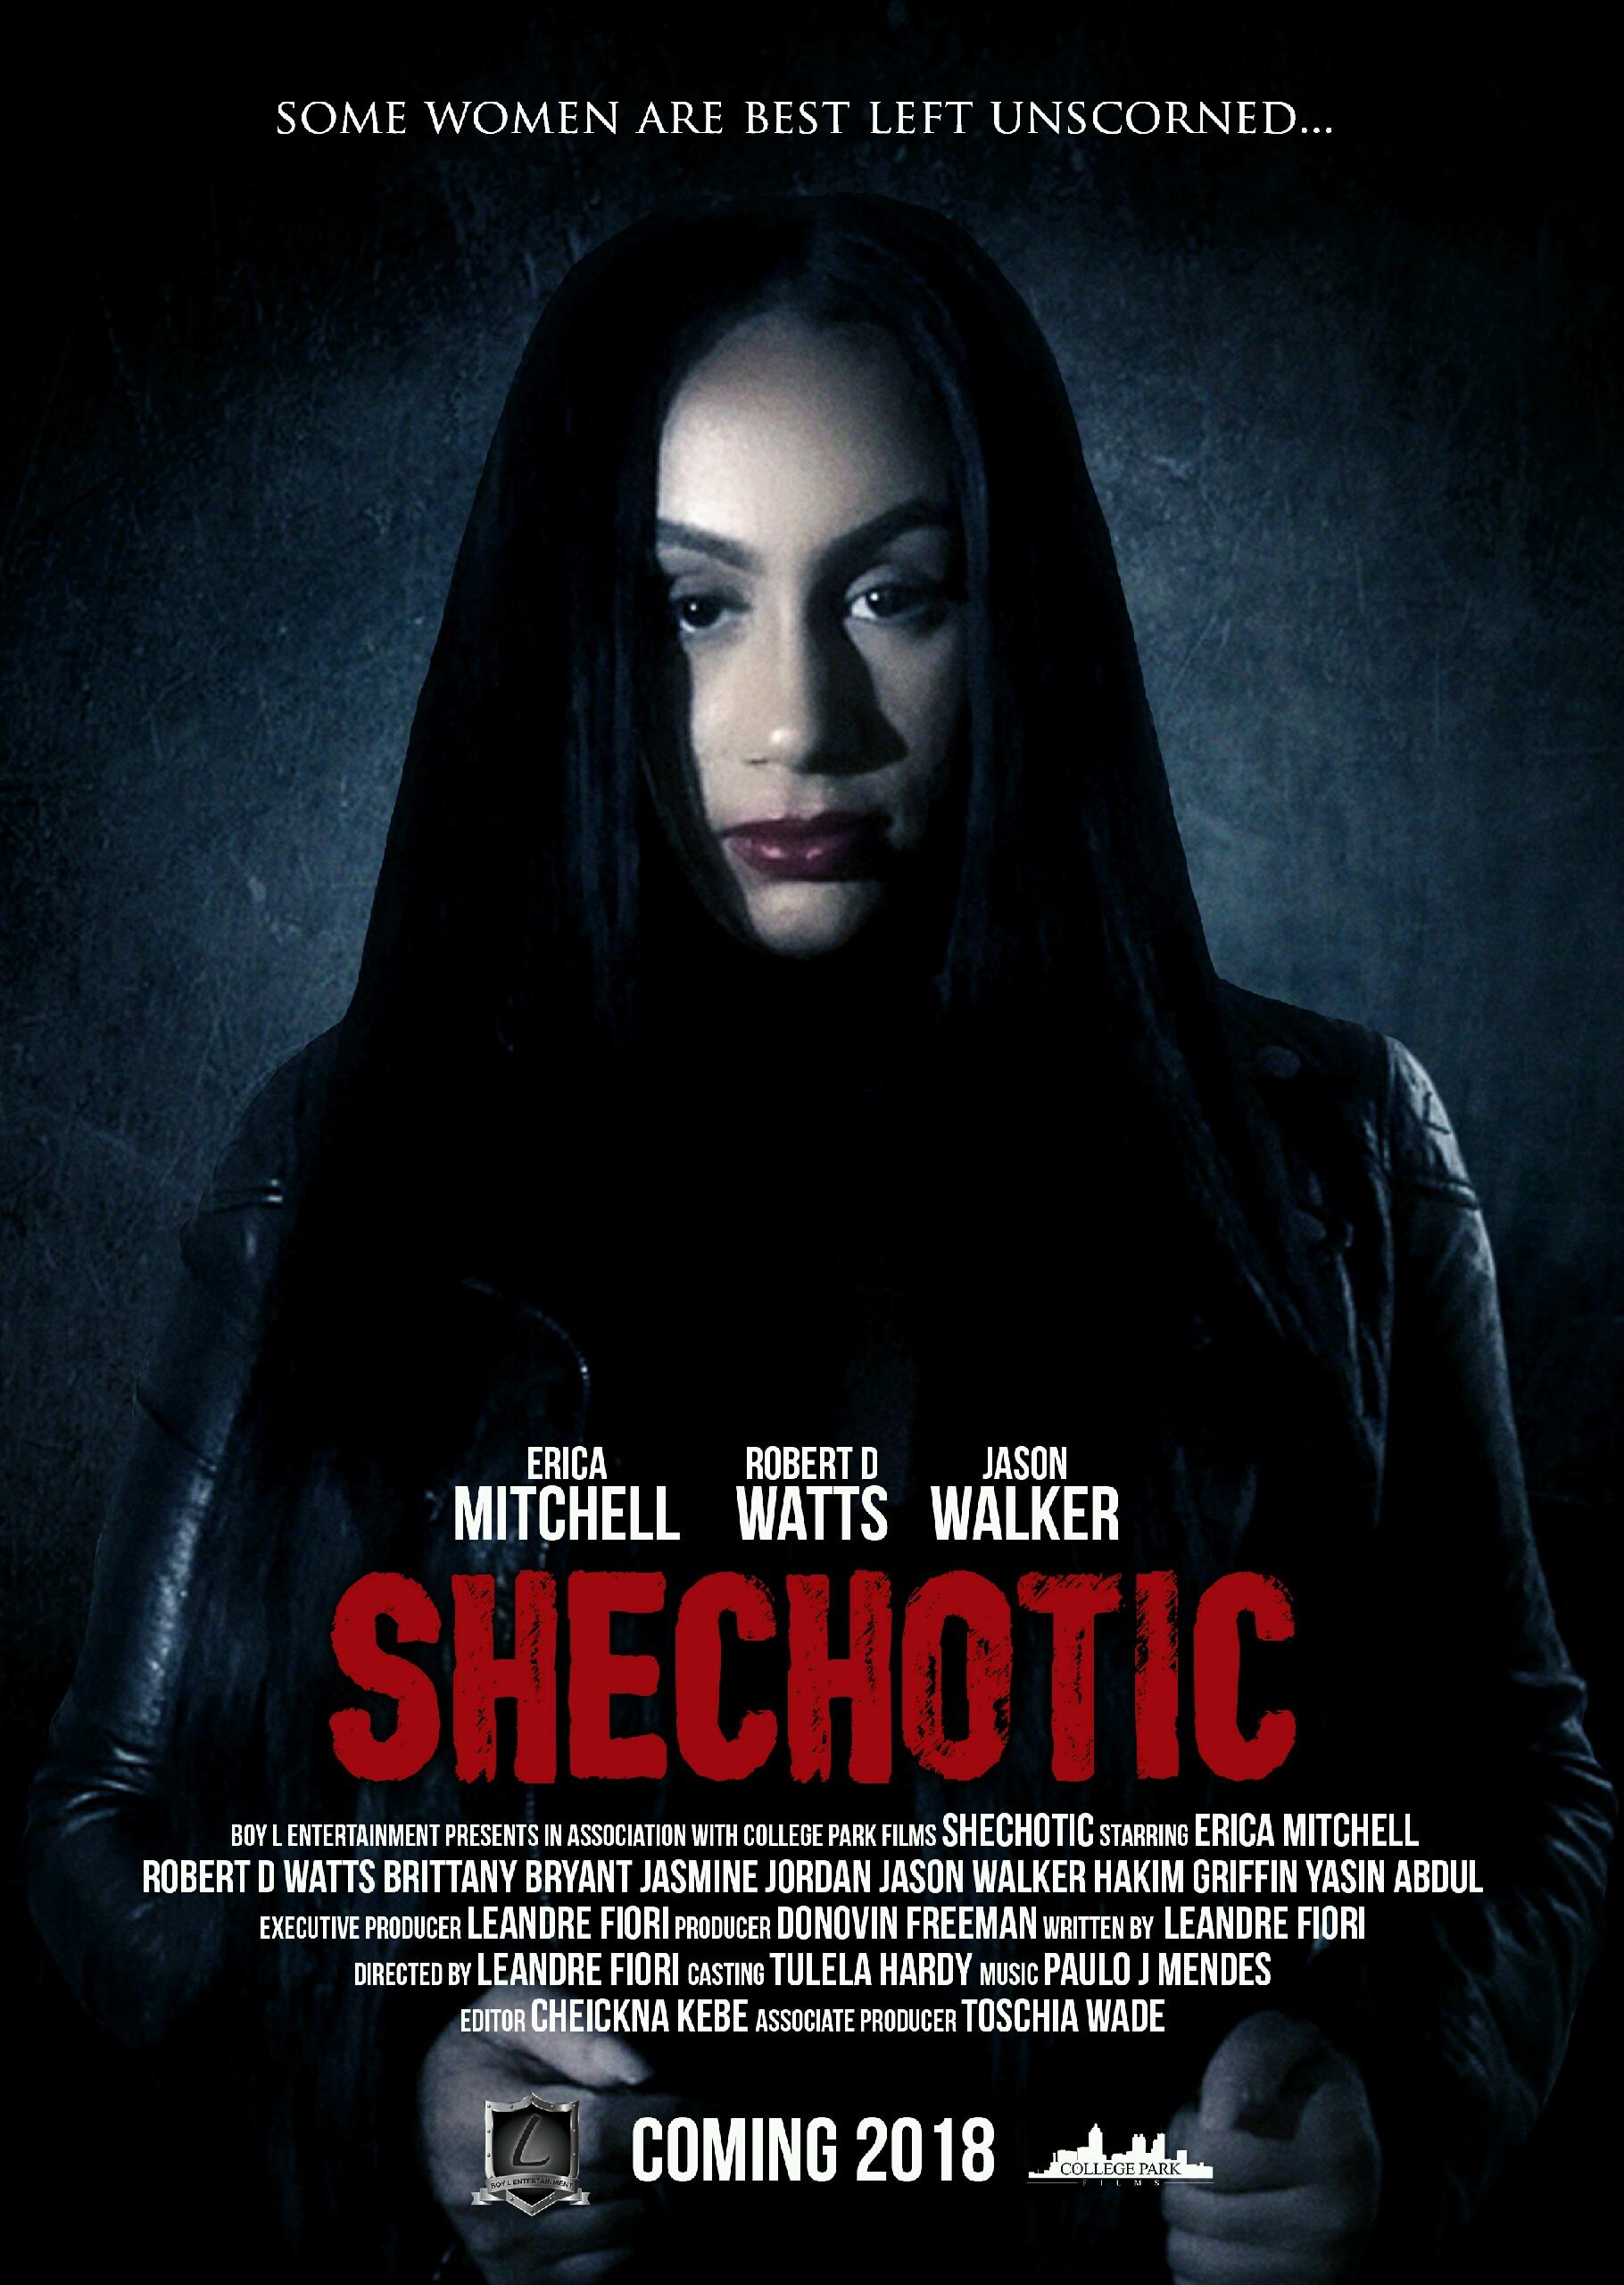 Nonton film SheChotic layarkaca21 indoxx1 ganool online streaming terbaru